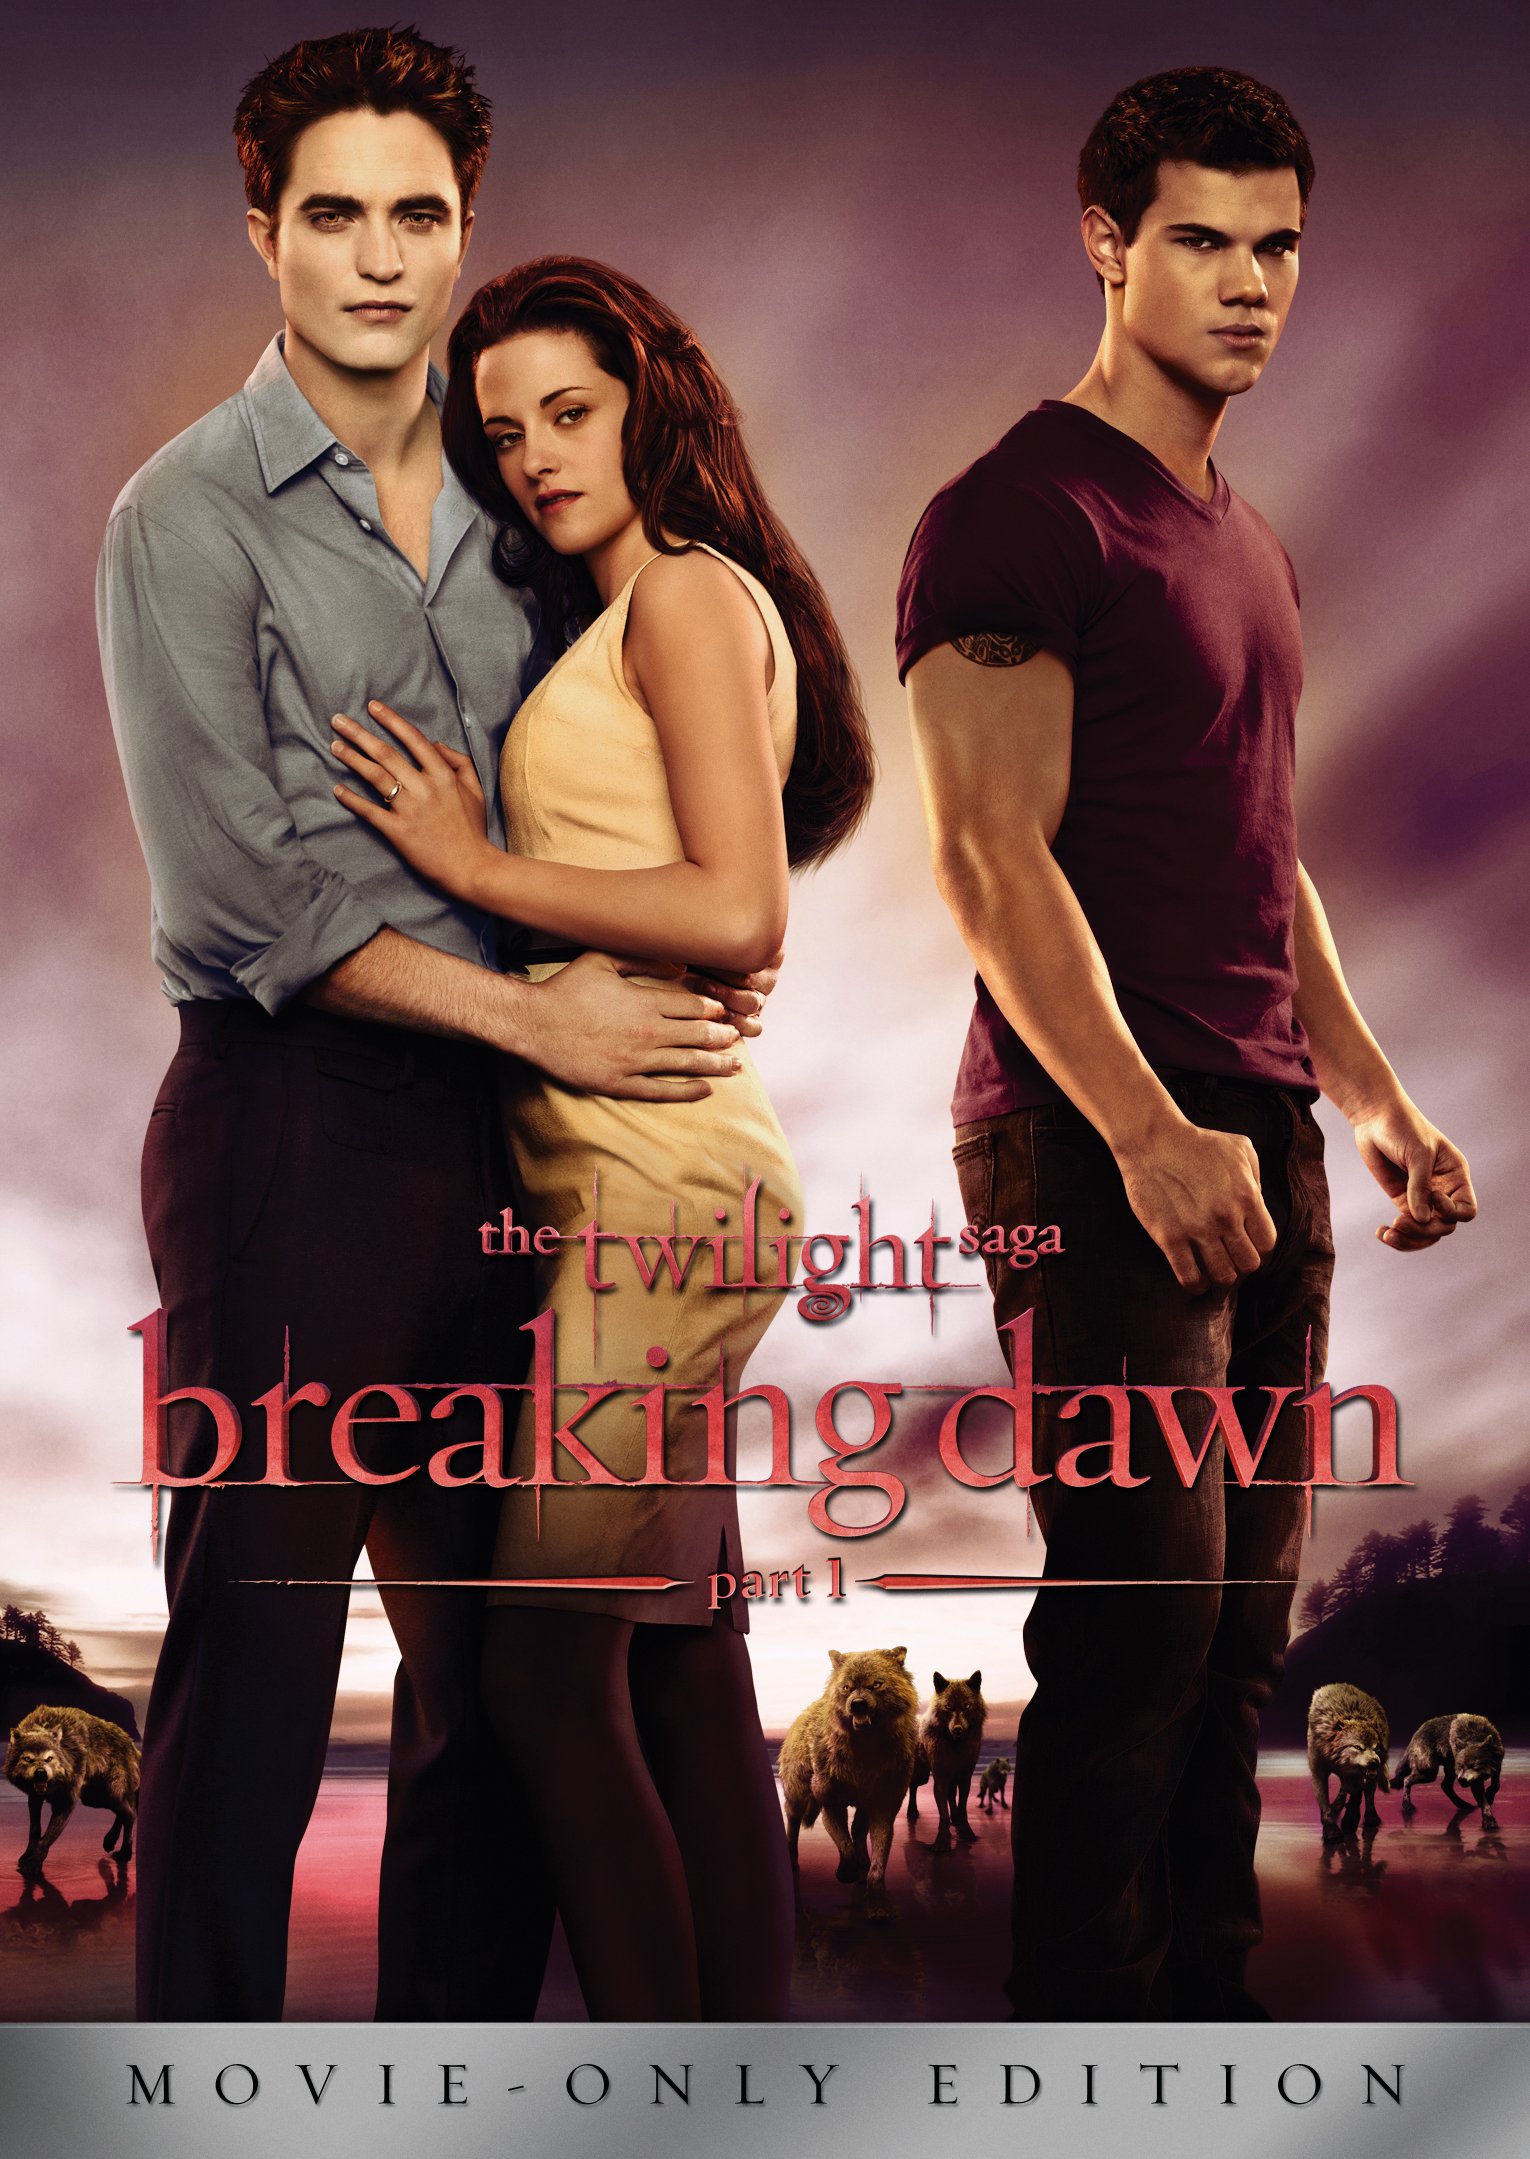 The Twilight Saga: Breaking Dawn - Part 1 DVD Release Date February 11, 2012